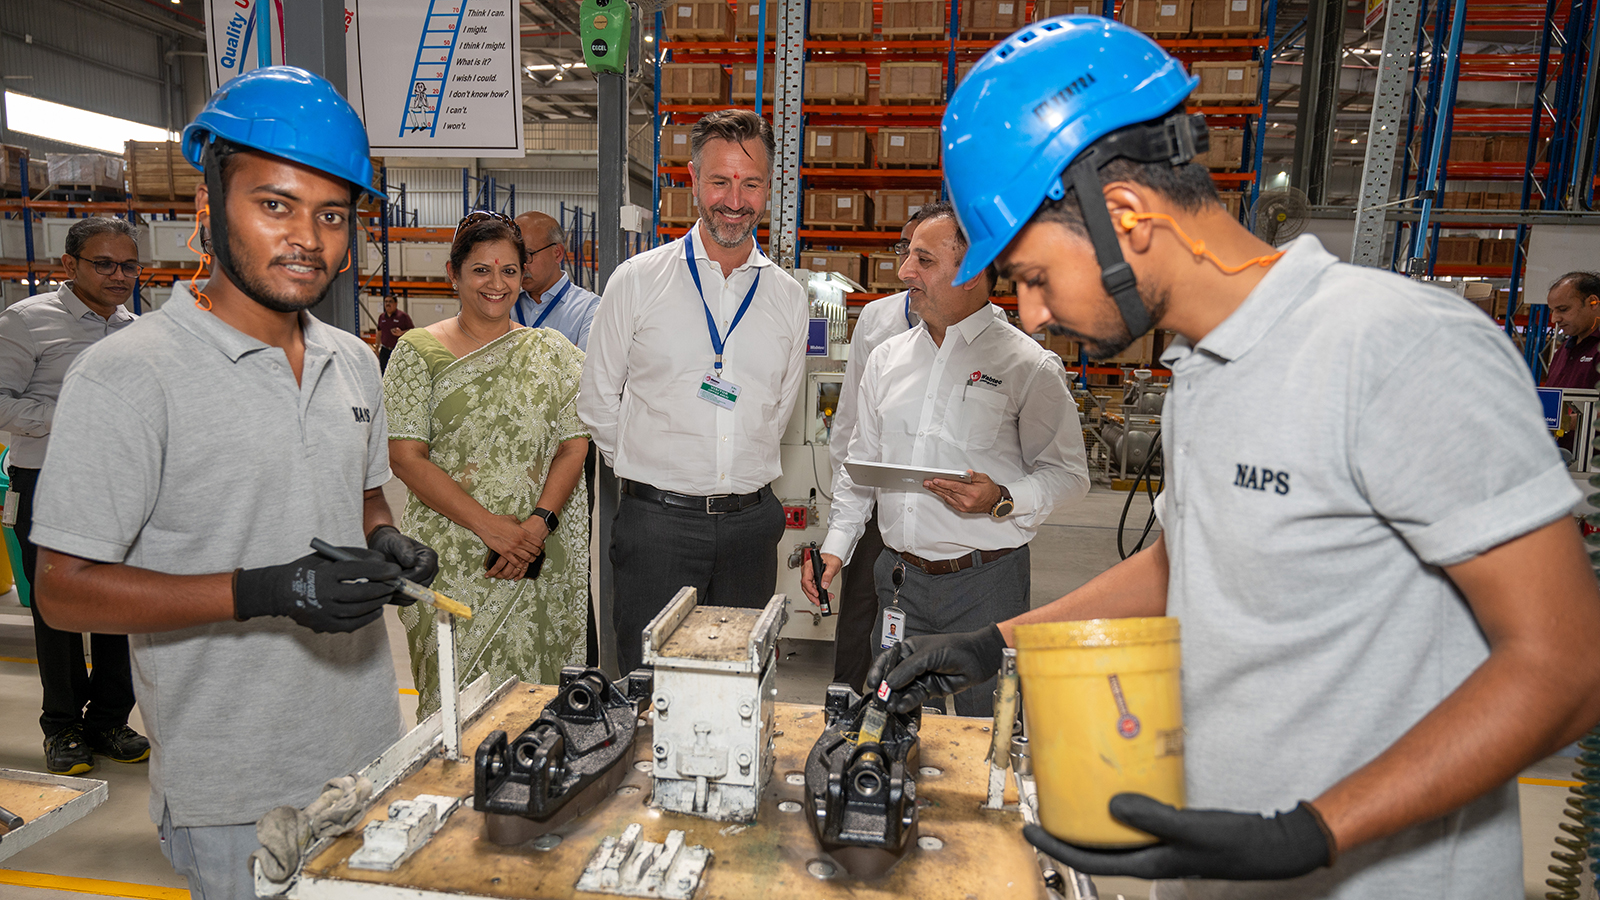 Wabtec Inaugurates New Manufacturing Campus in Rohtak India